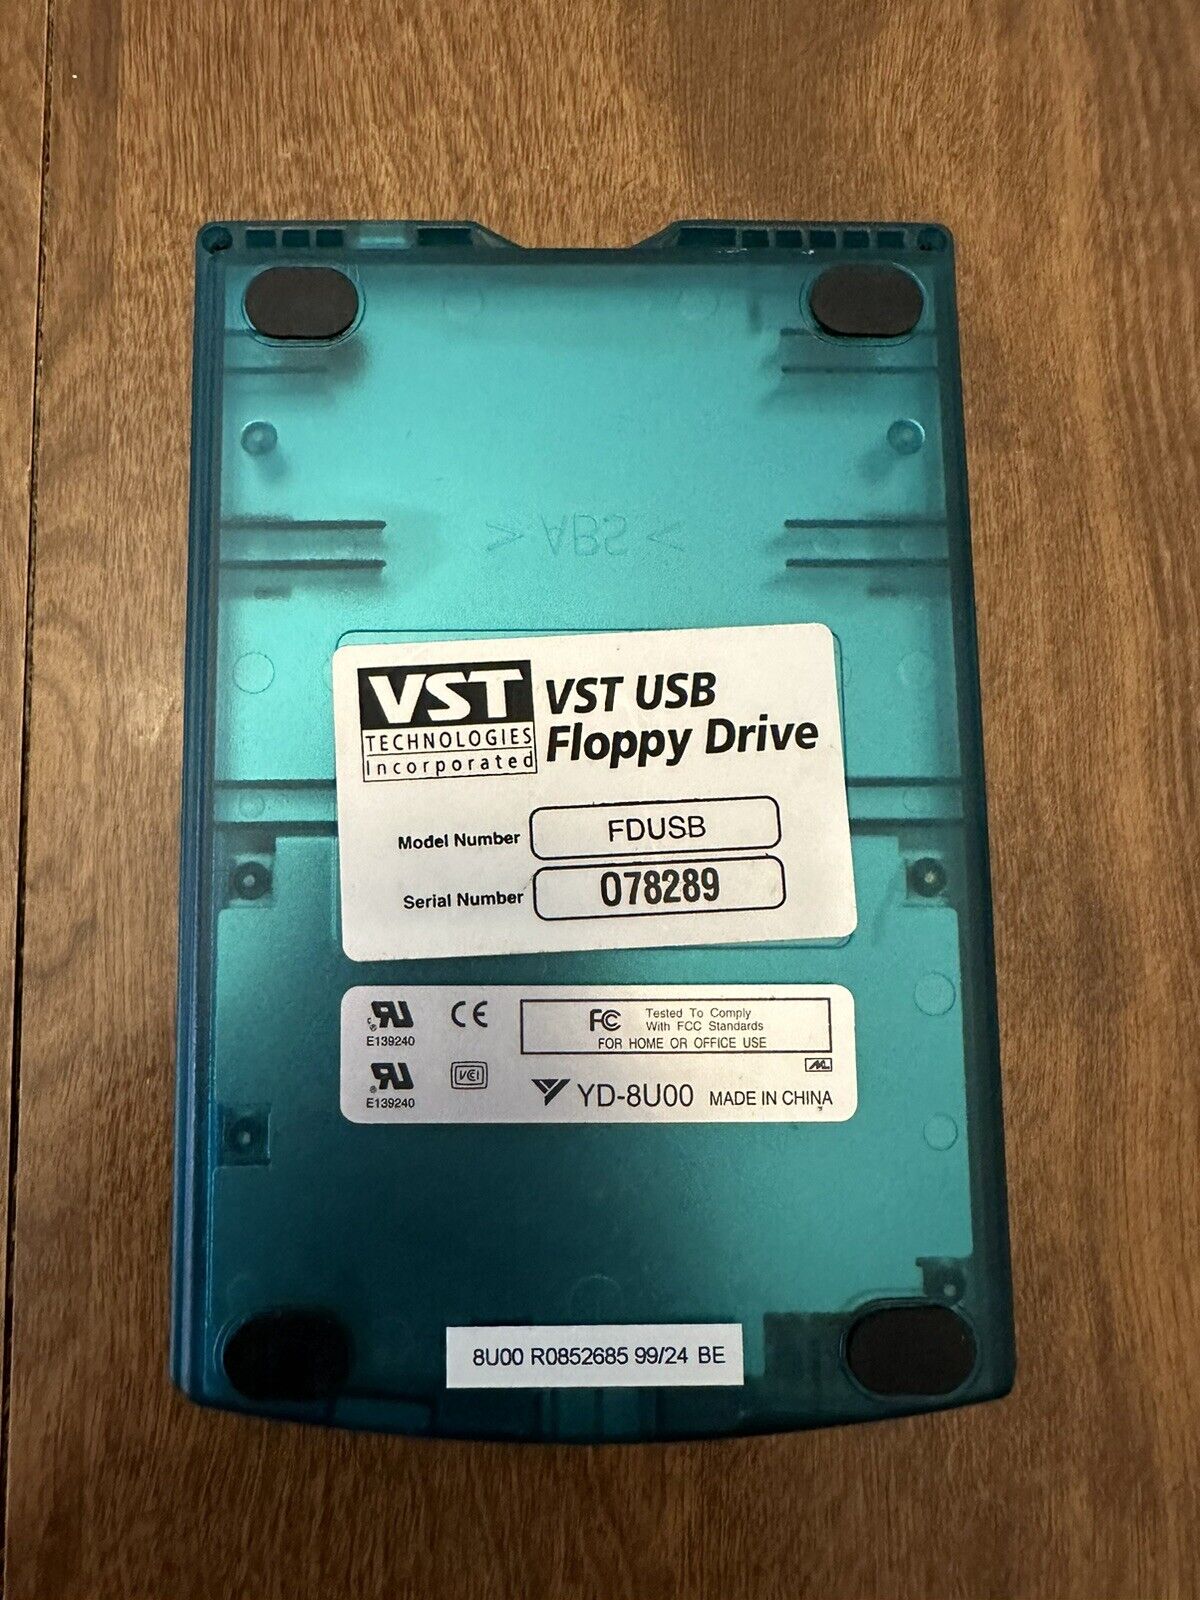 TEAC External USB Floppy Disk Drive FDD FD-05PU VST Tech 1.44MB FDUSB No Cord